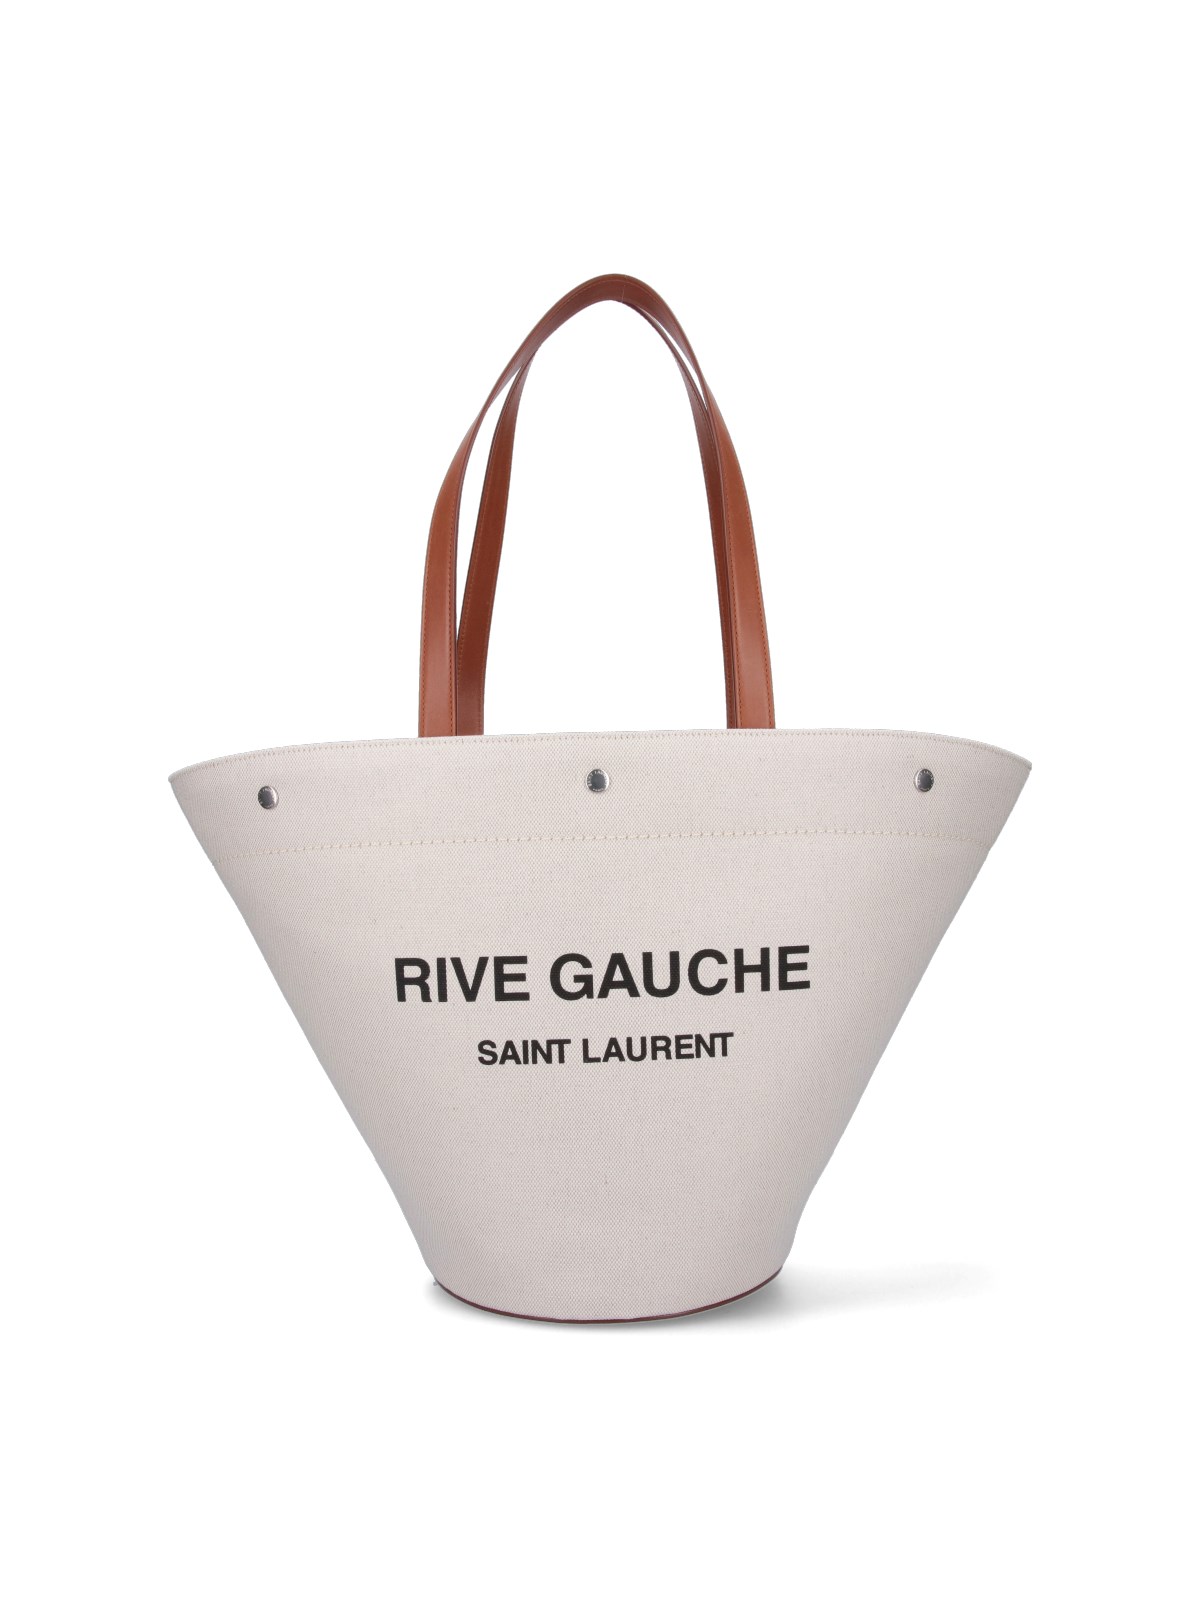 Saint Laurent Rive Gauche Tote Bag In Cream